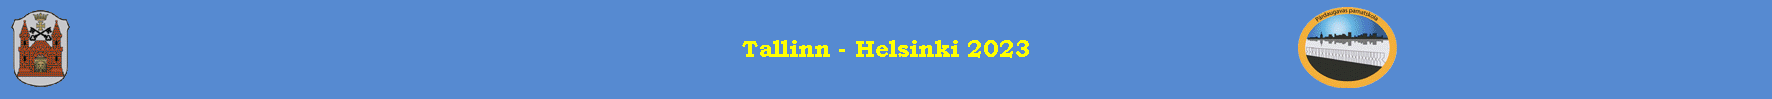 Tallinn - Helsinki 2023